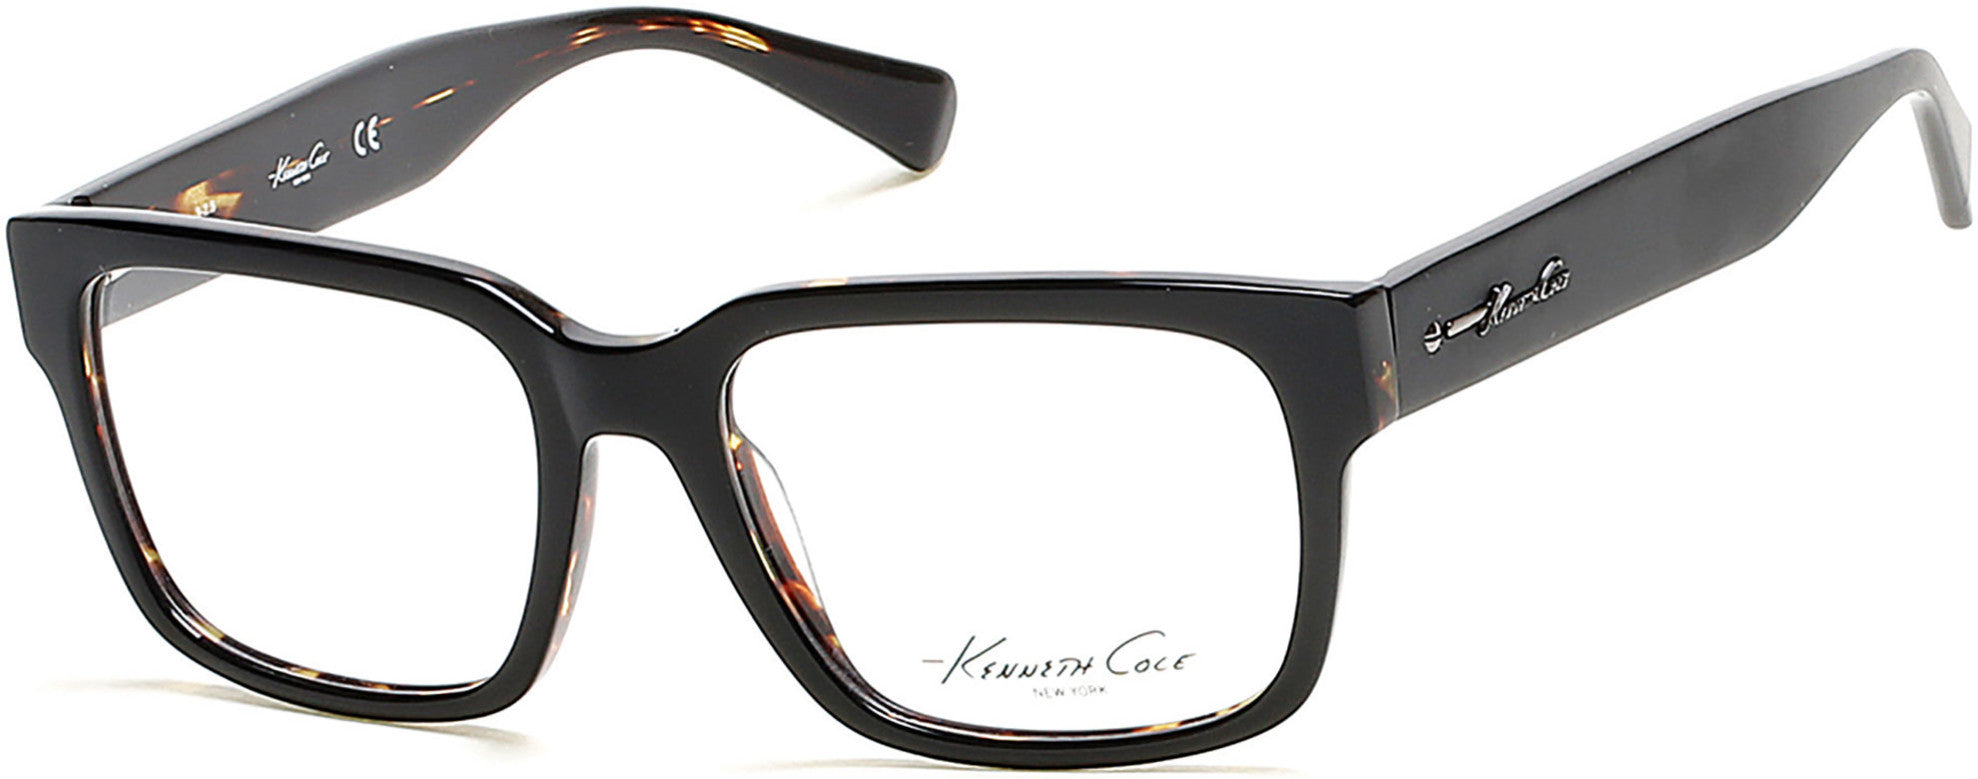 Kenneth Cole New York,Kenneth Cole Reaction KC0246 Geometric Eyeglasses 005-005 - Black/other